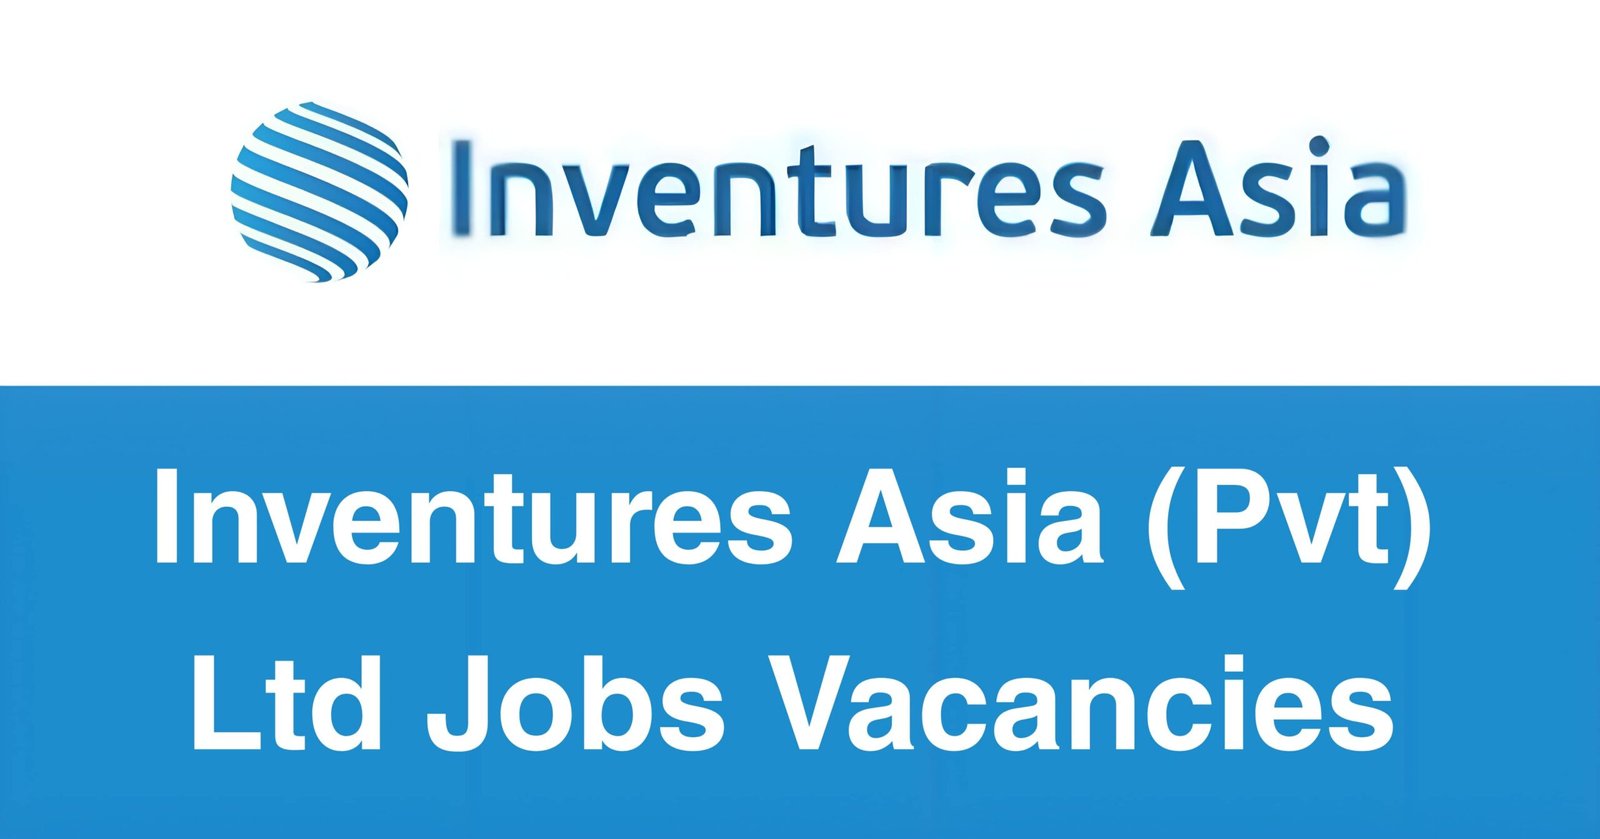 Inventures Asia (Pvt) Ltd Jobs Vacancies